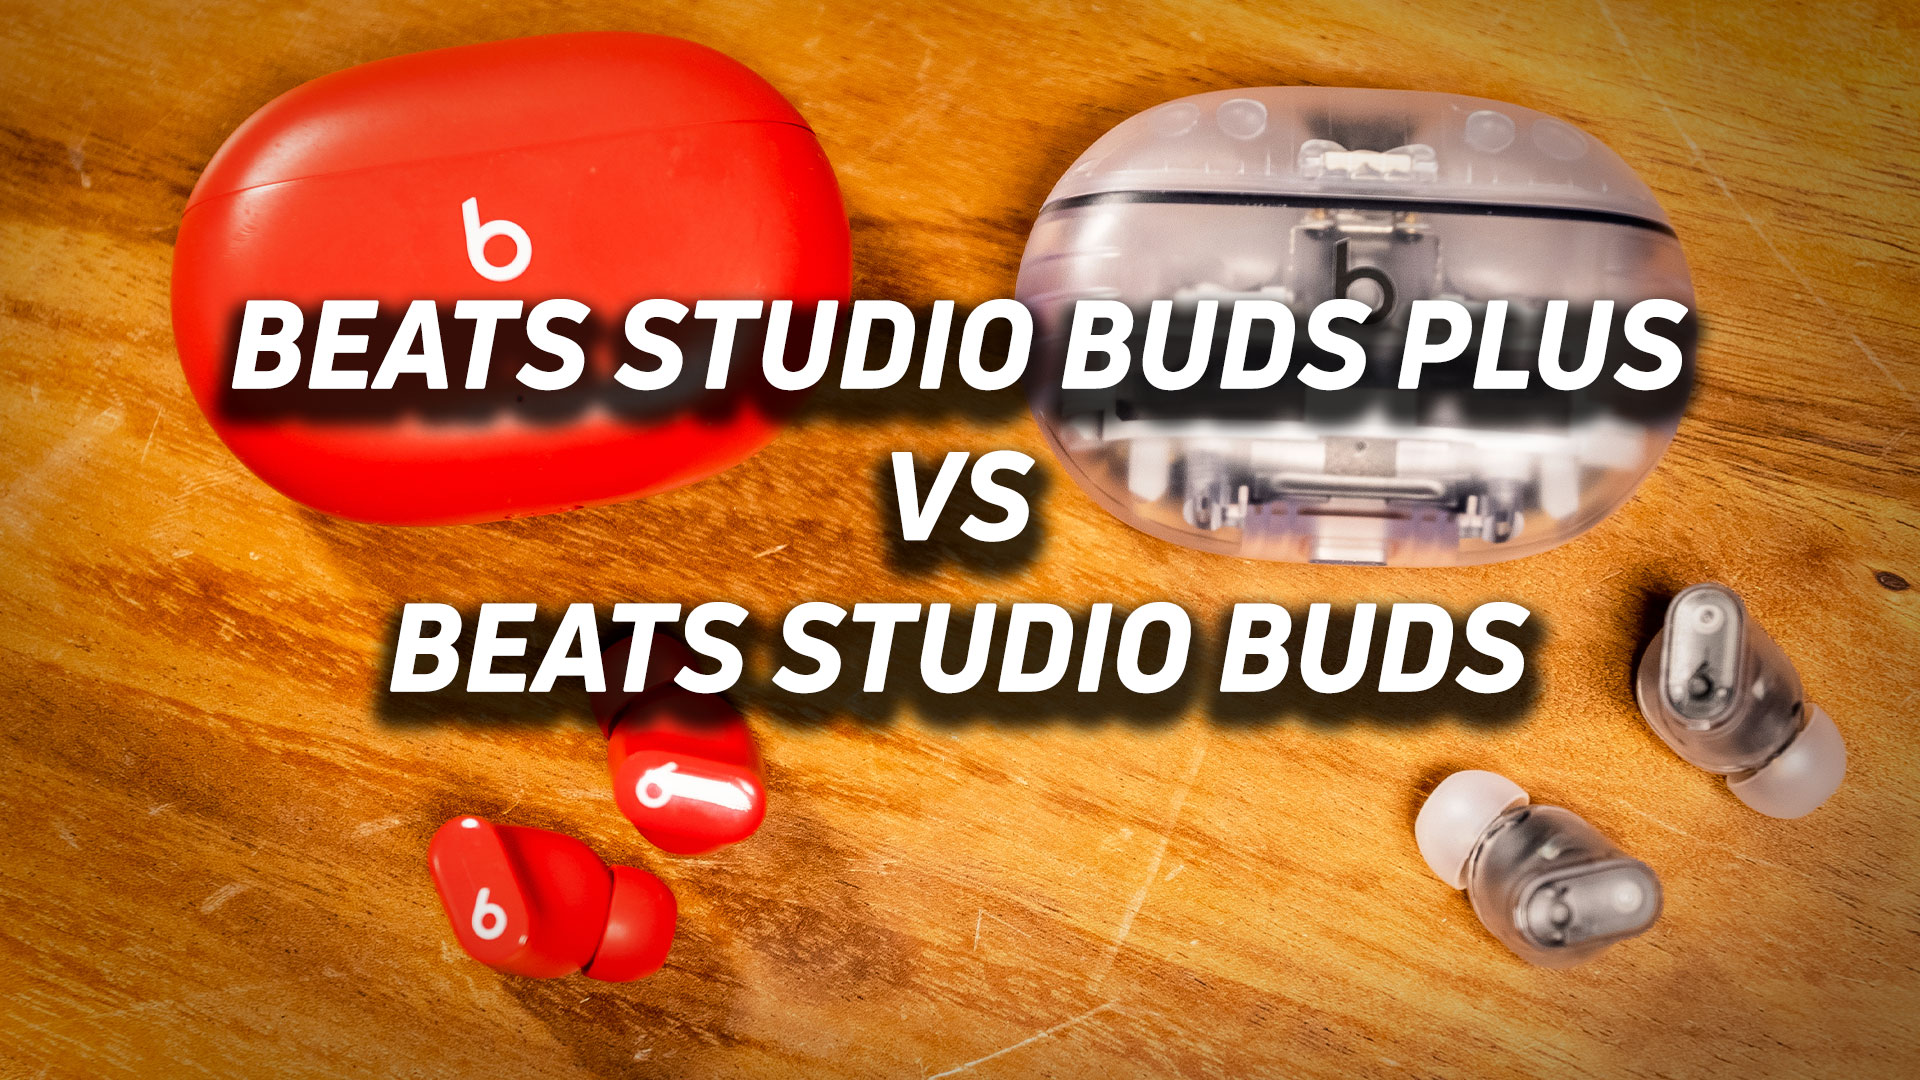 The Studio Buds vs Studio Buds Plus with versus text overlaid.